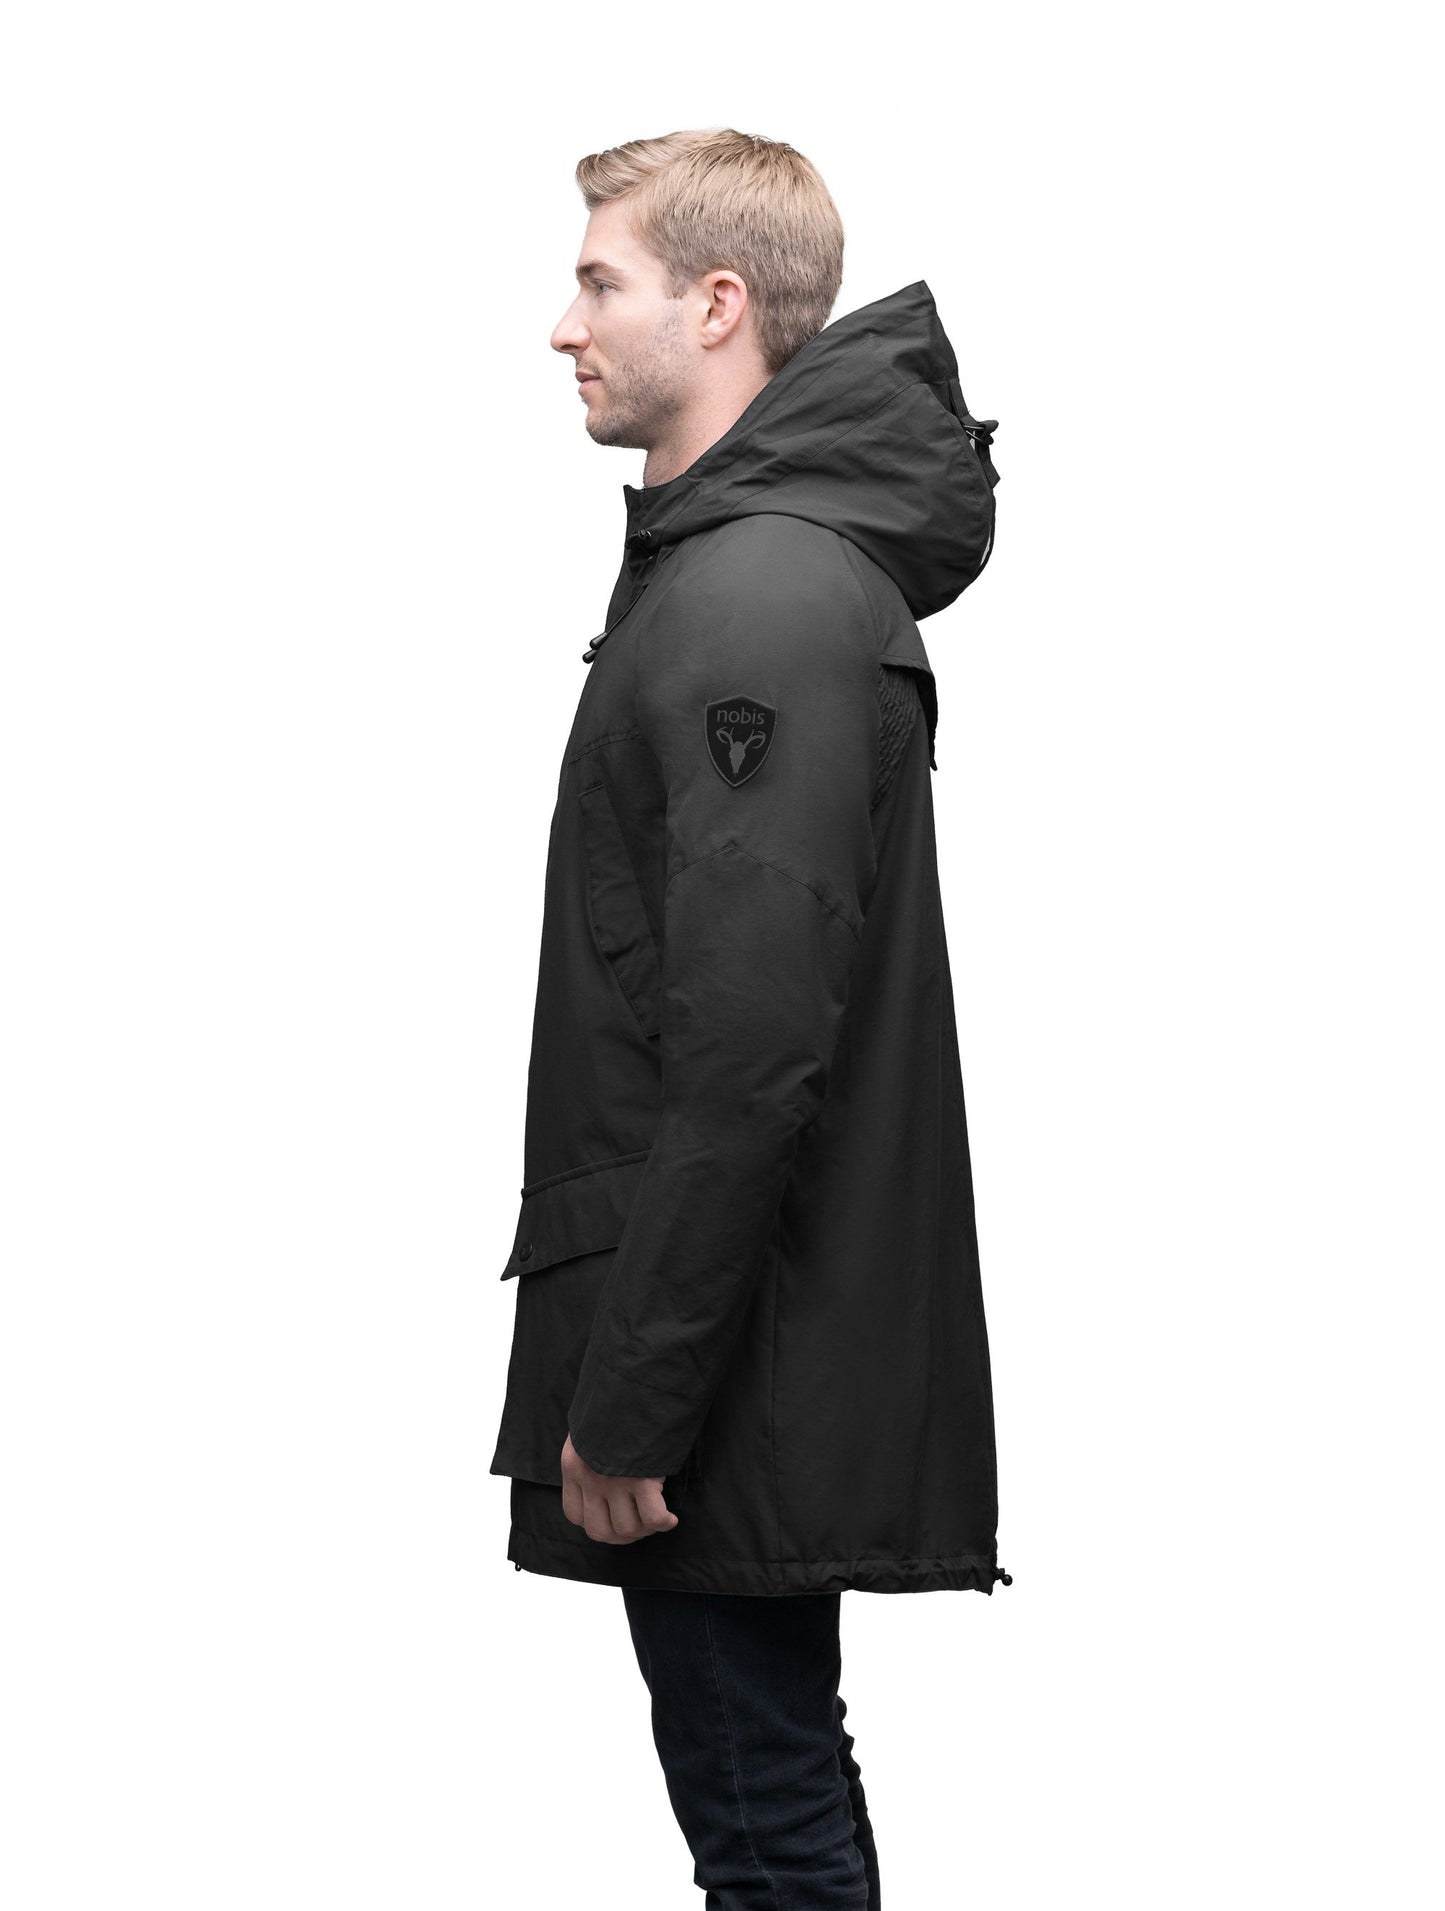 Men's hooded rain coat with hood in Black